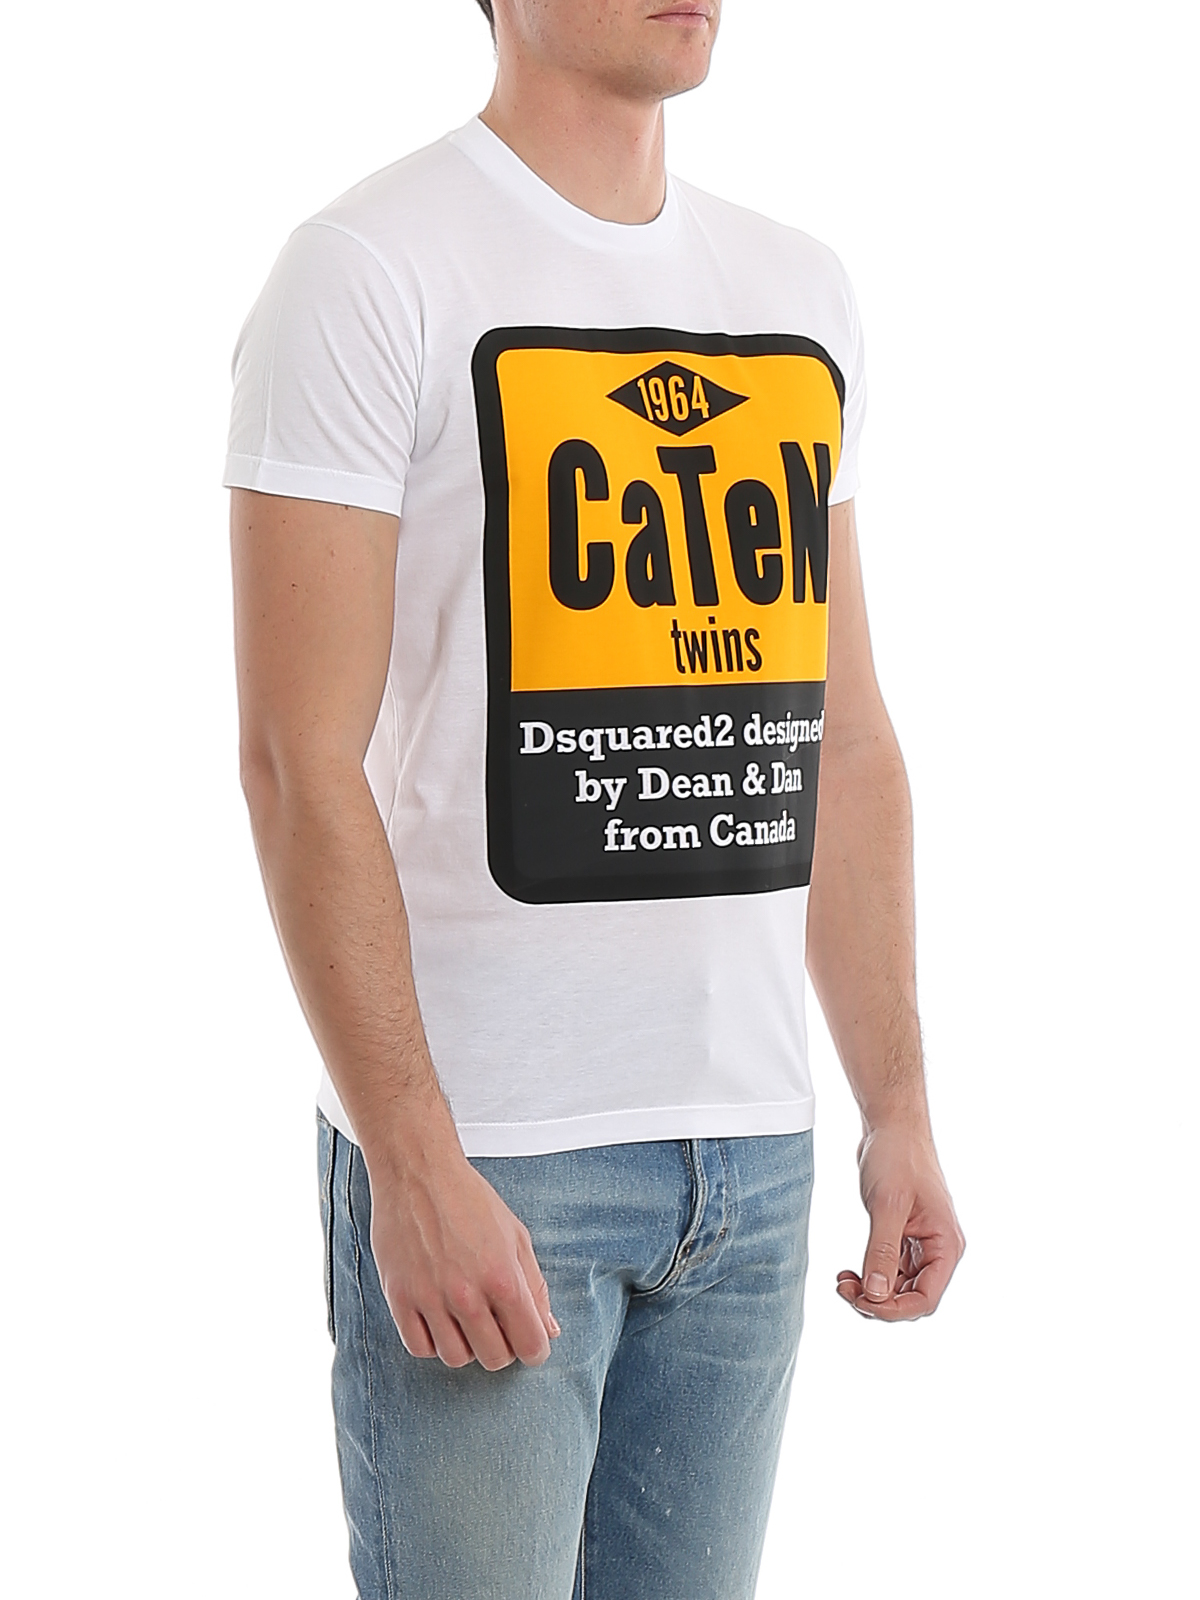 paperback wij Correlaat T-shirts Dsquared2 - Caten Twins T-Shirt - S74GD0652S22427100 | iKRIX.com